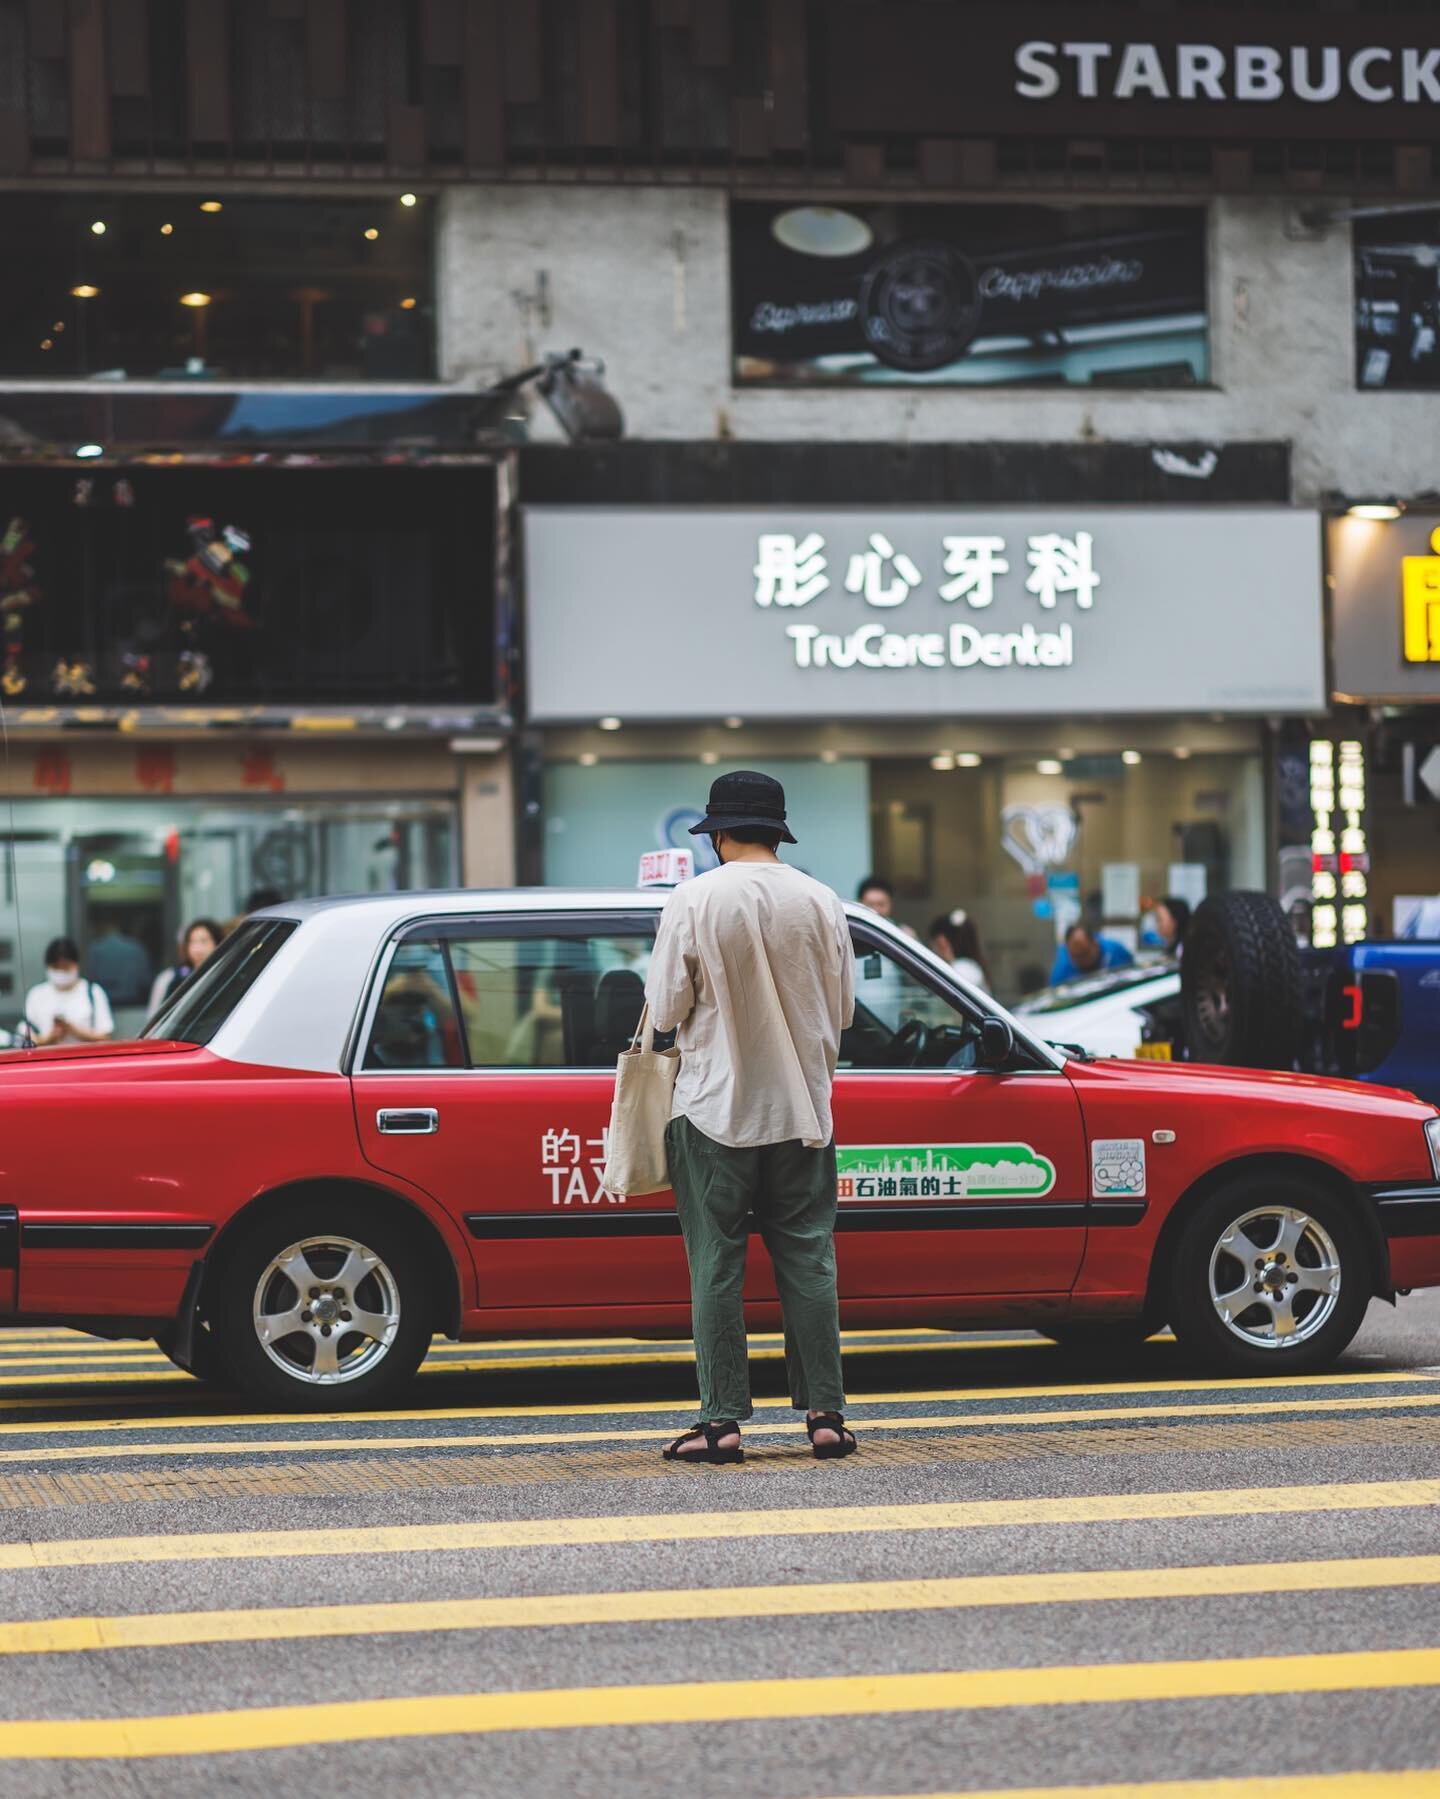 .
.
.
.
.
#streetphotographerscommunity #picsofhk
#streetdreamsmag #hongkonginsta 
#dreaminstreets #lensonstreets 
#streetsdiscovered #capturestreets
#streetphotography  #streetmobs 
#streetmagazine  #streetsofhongkong 
#streetartphotography #monster